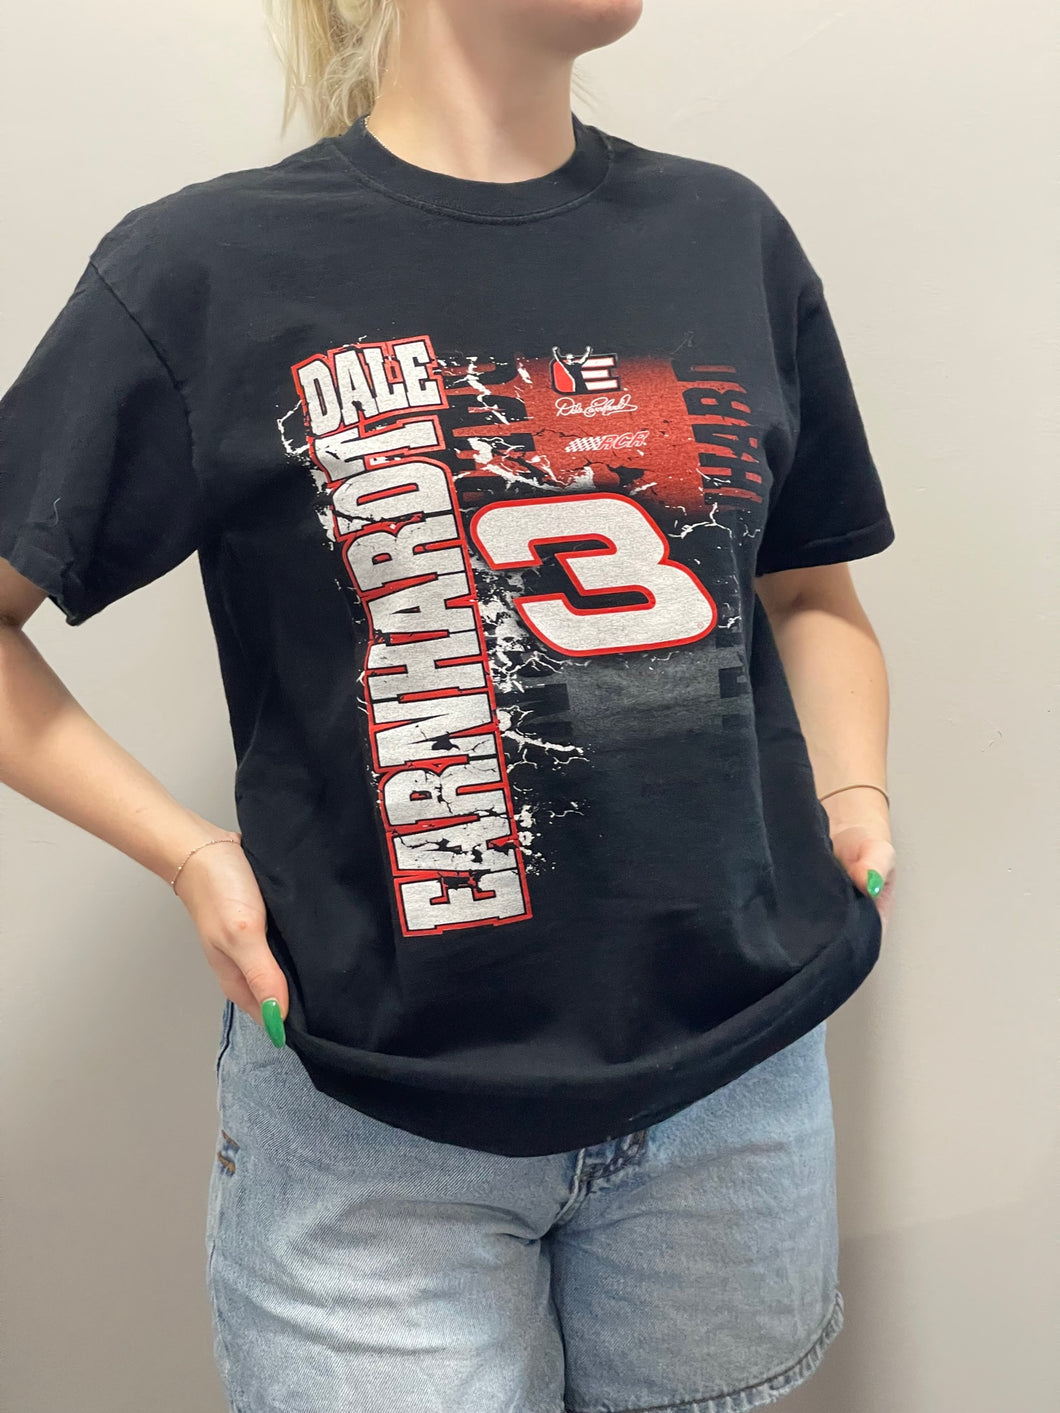 #3 NASCAR DALE Earnhardt Black T-Shirt (M)